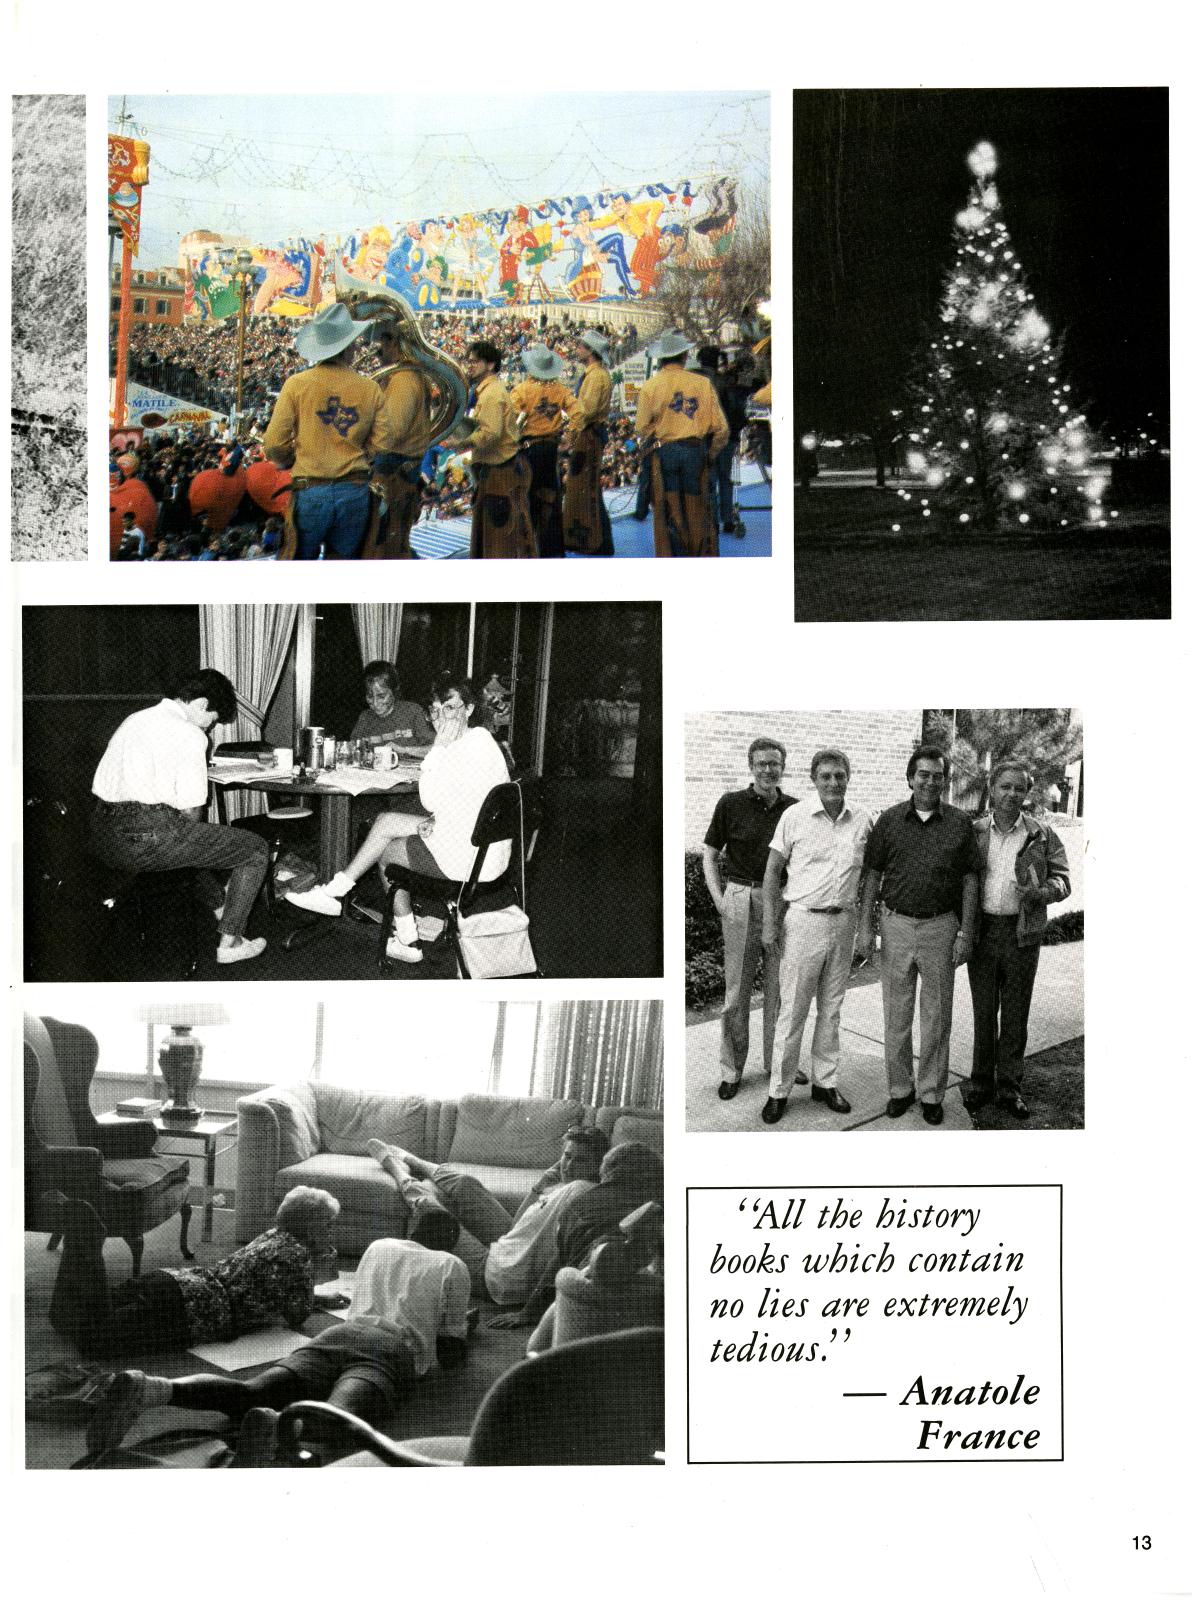 The Bronco, Yearbook of Hardin-Simmons University, 1989
                                                
                                                    13
                                                